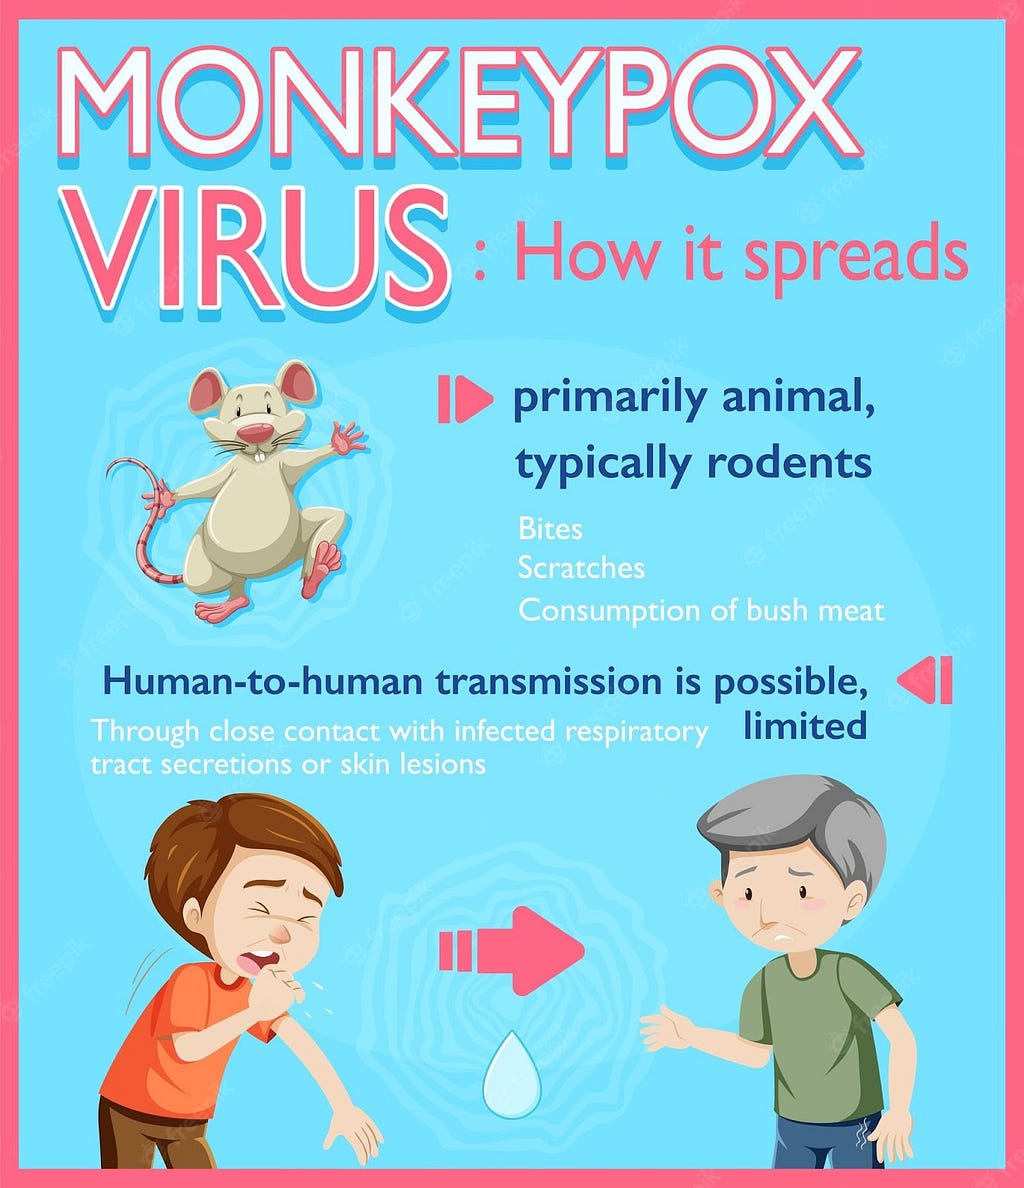 Monkeypox - how it spreads